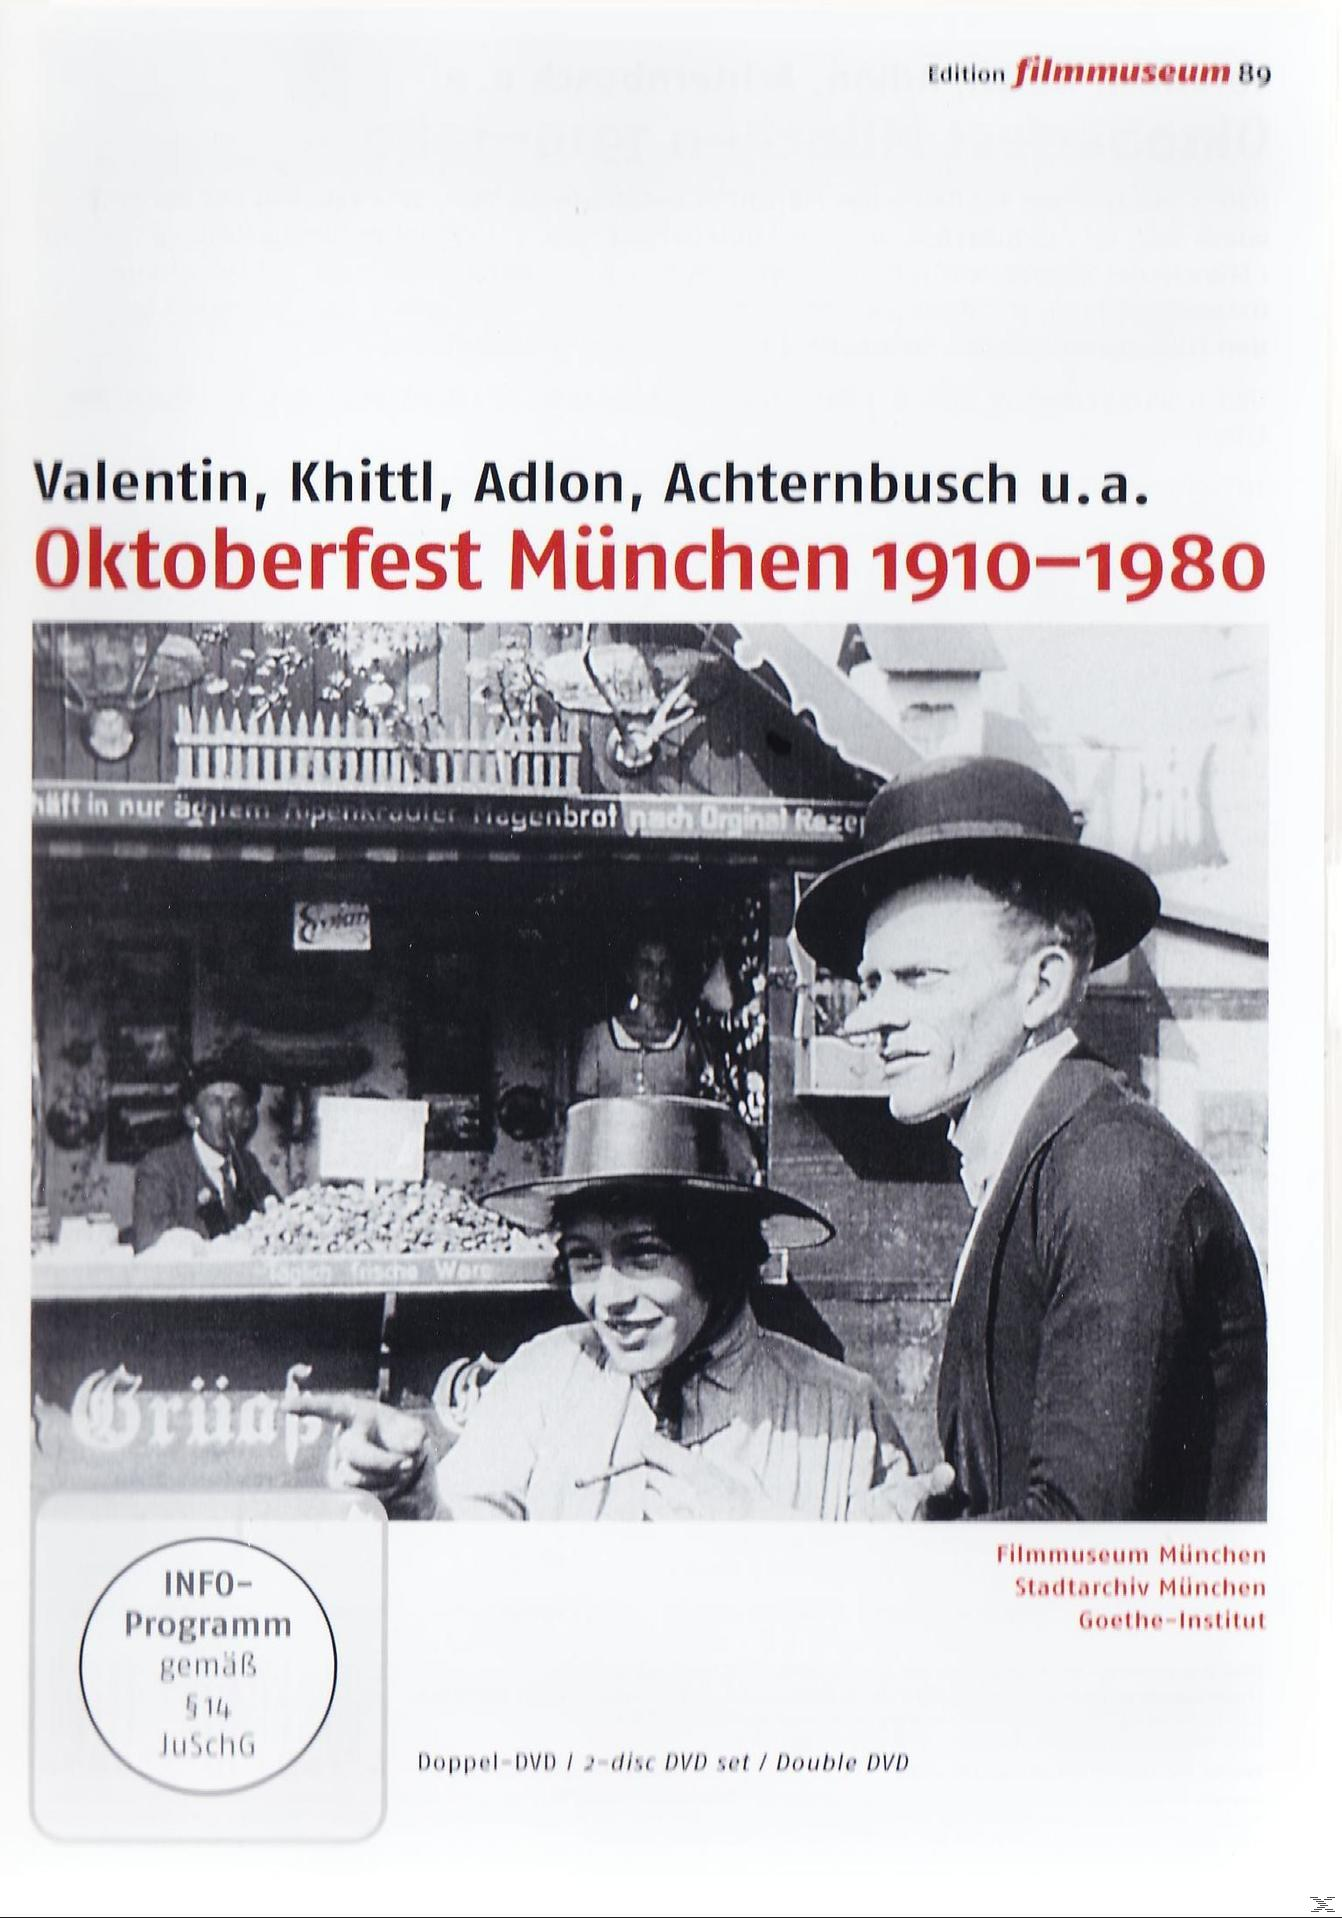 OKTOBERFEST - EDITION MÜNCHEN DVD FILMMUSEUM 1910-1980